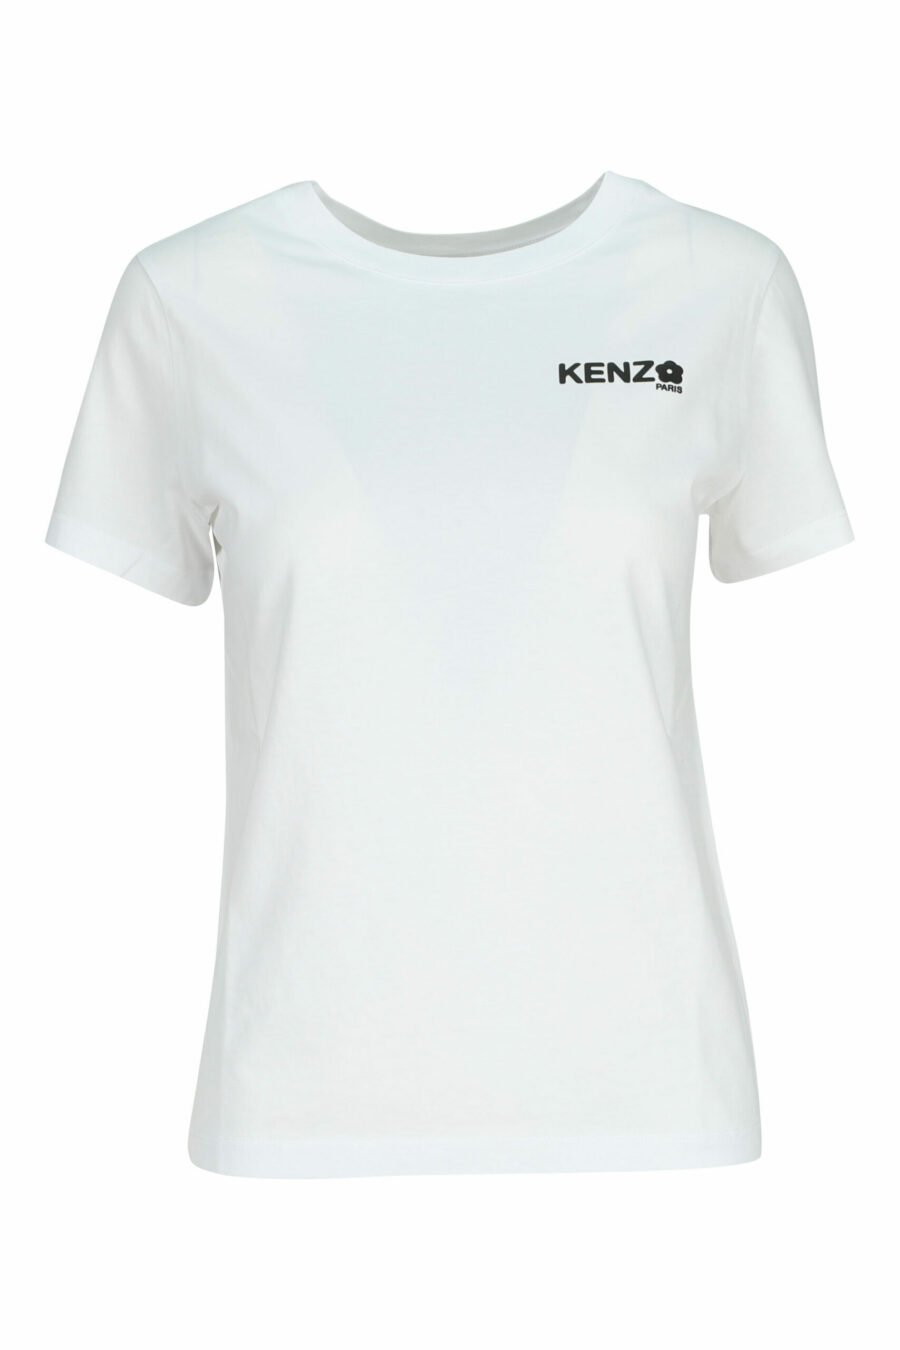 Camiseta blanca con minilogo "kenzo boke flower" blanco - 3612230587748 scaled